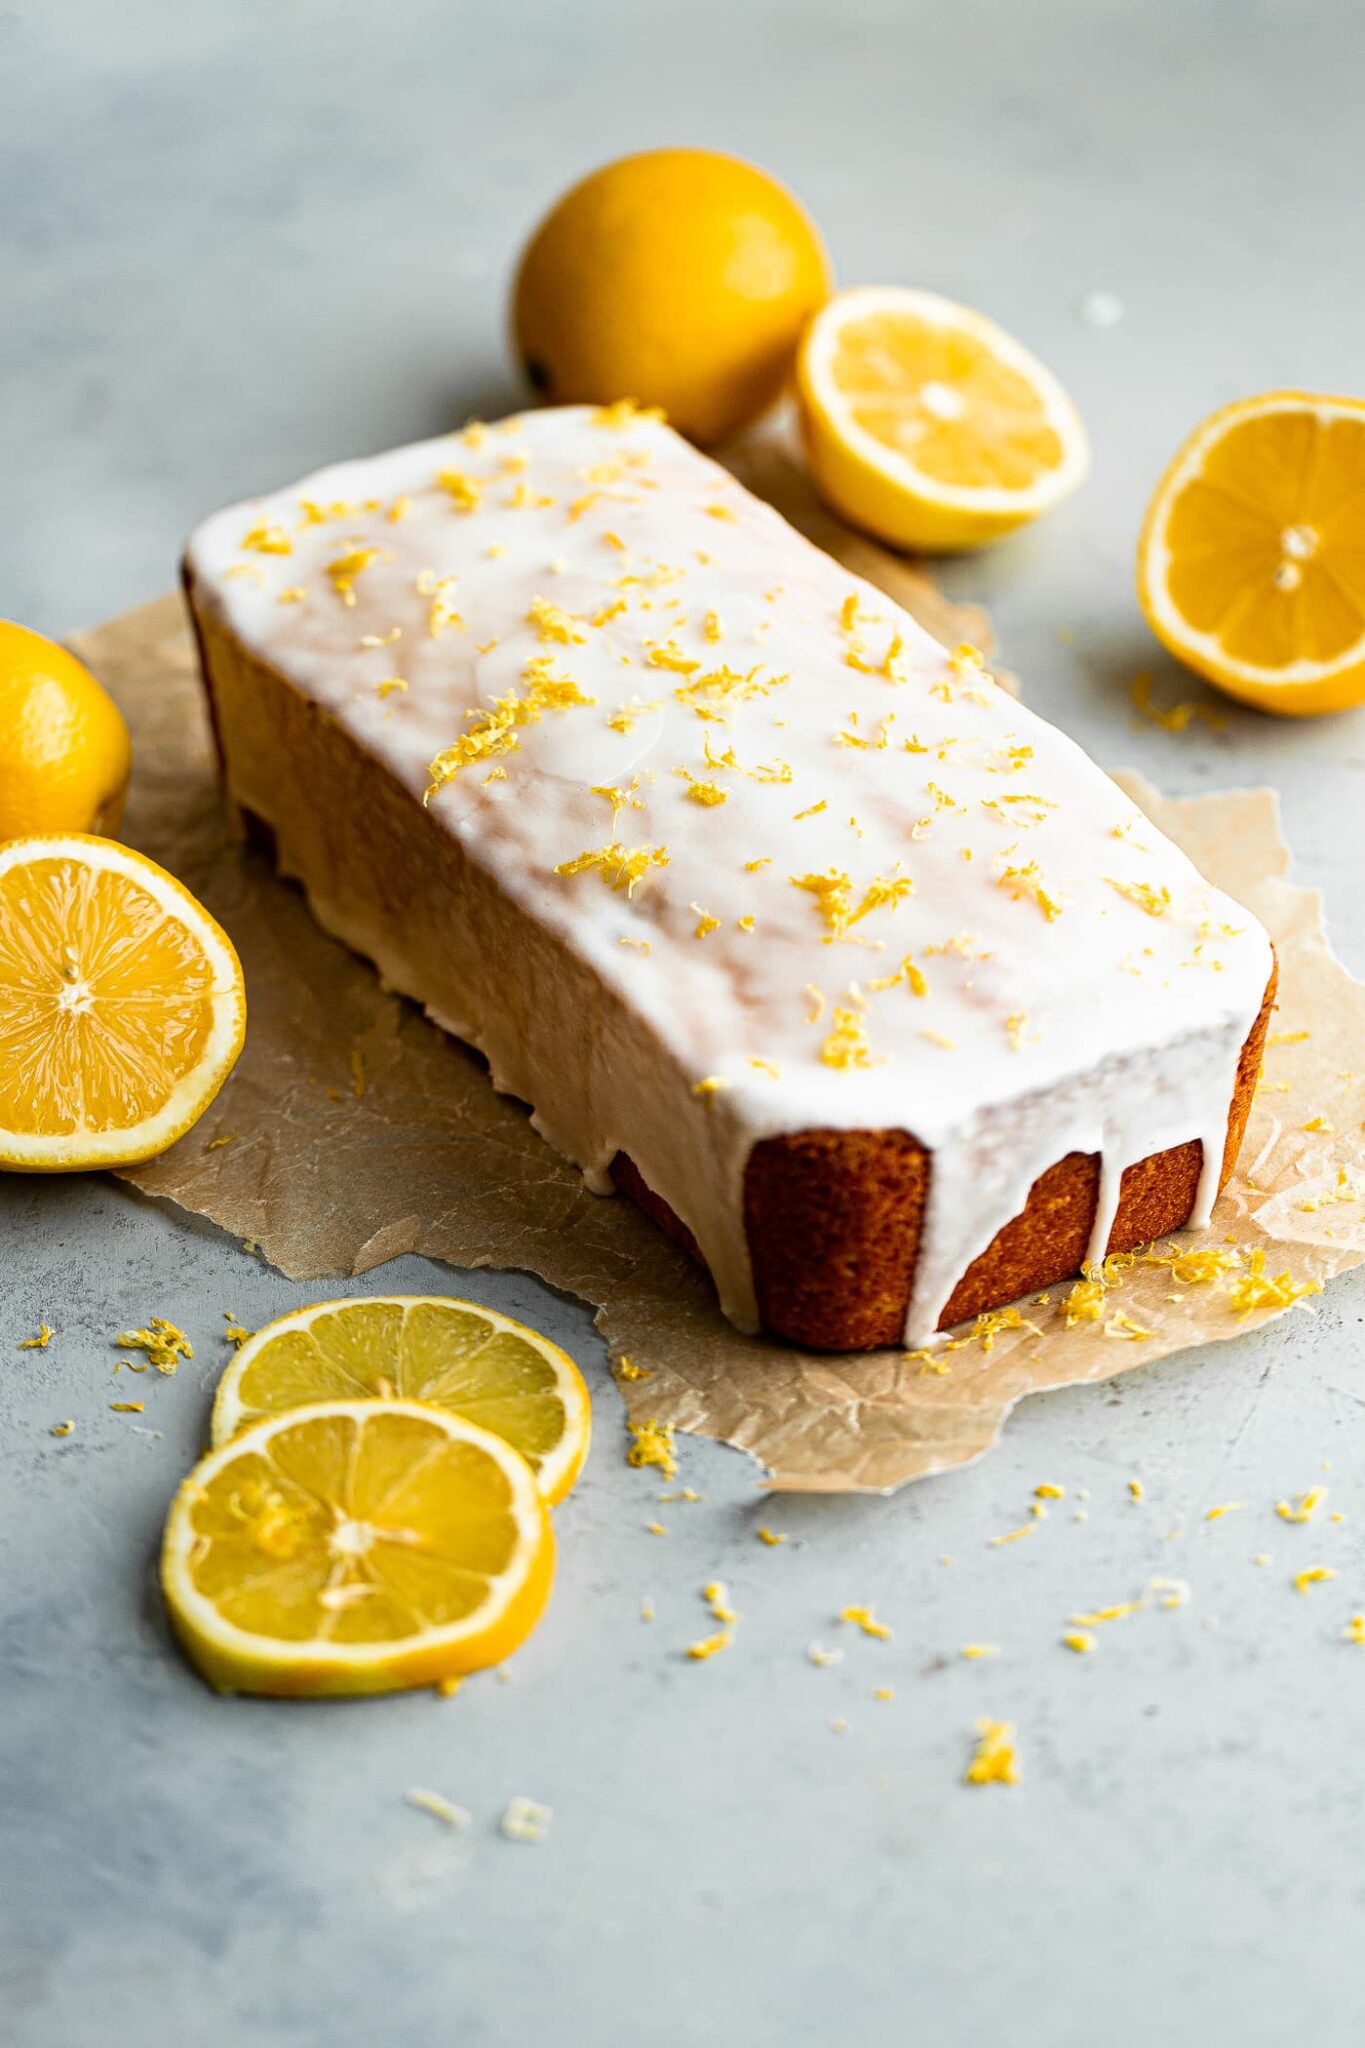 Easy Vegan Loaf Cake Recipe with Lemon Glaze - The Urben Life